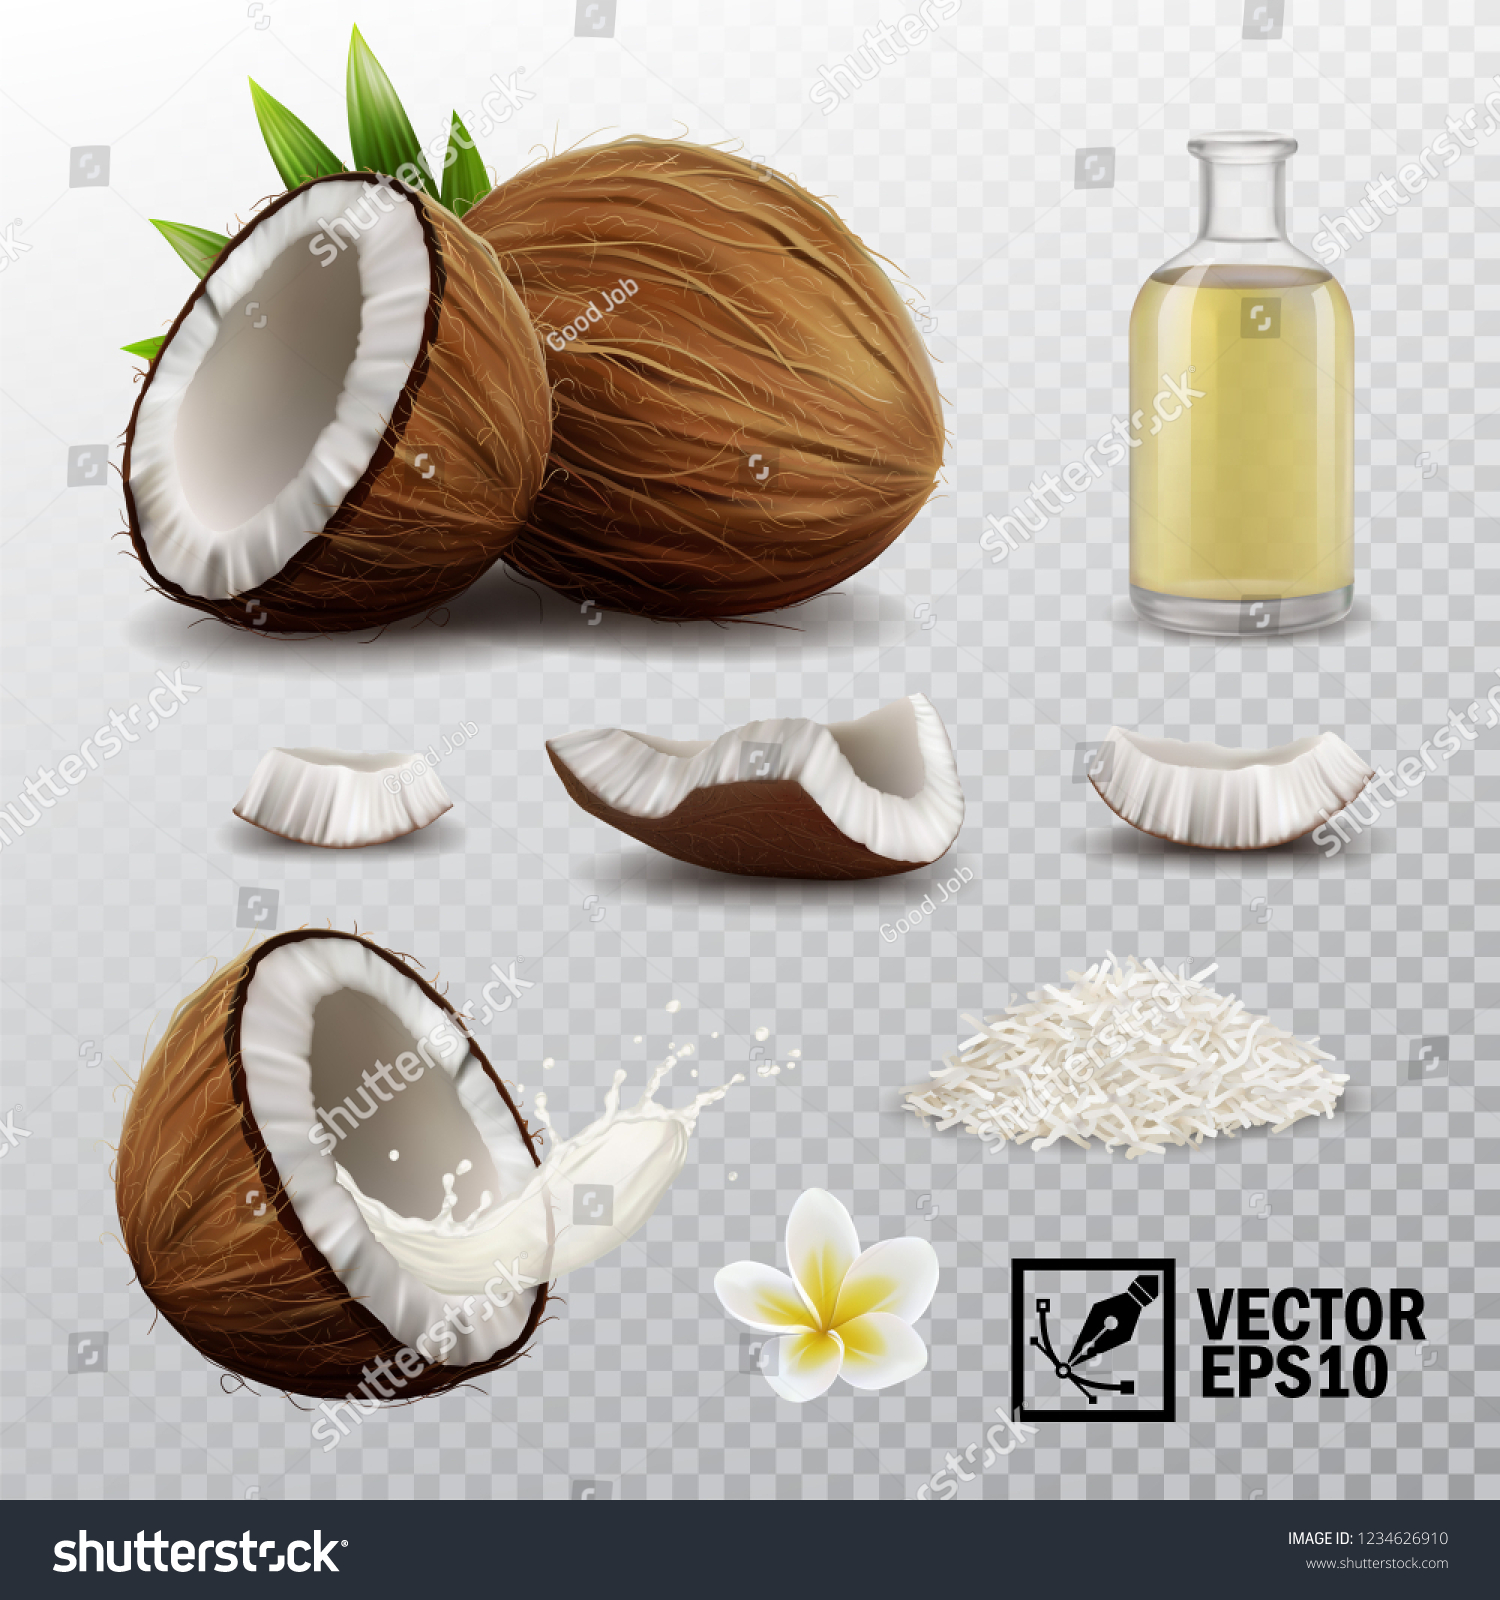 SVG of 3d realistic vector set of elements (whole and half coconut, coconut chips, splash coconut milk or oil, coconut flower, oil bottle) svg